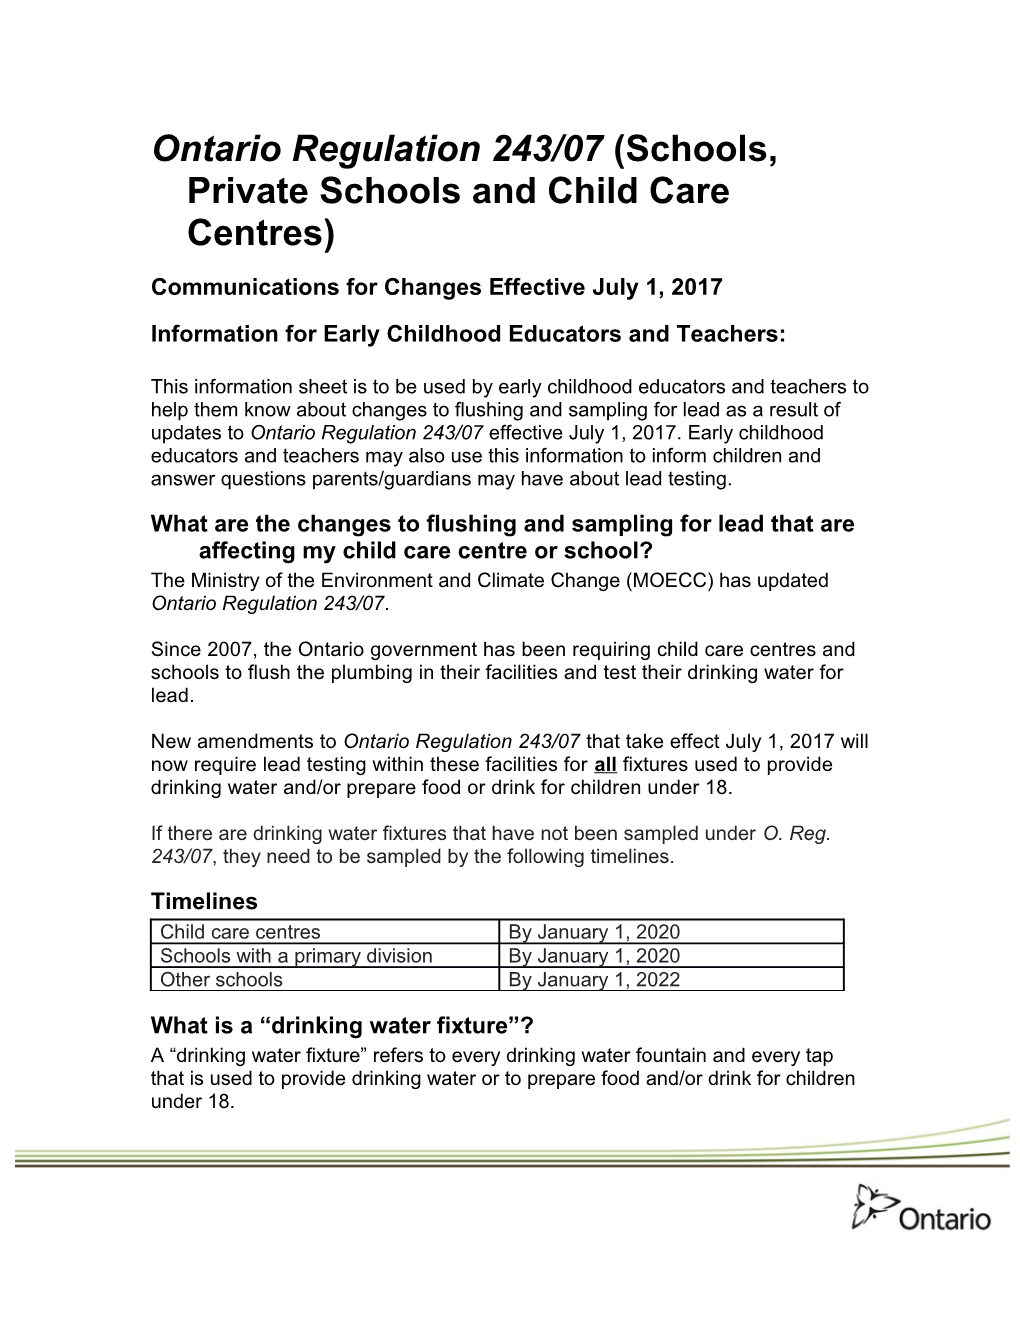 Ontario Regulation 243/07 (Schools, Private Schools and Child Care Centres)